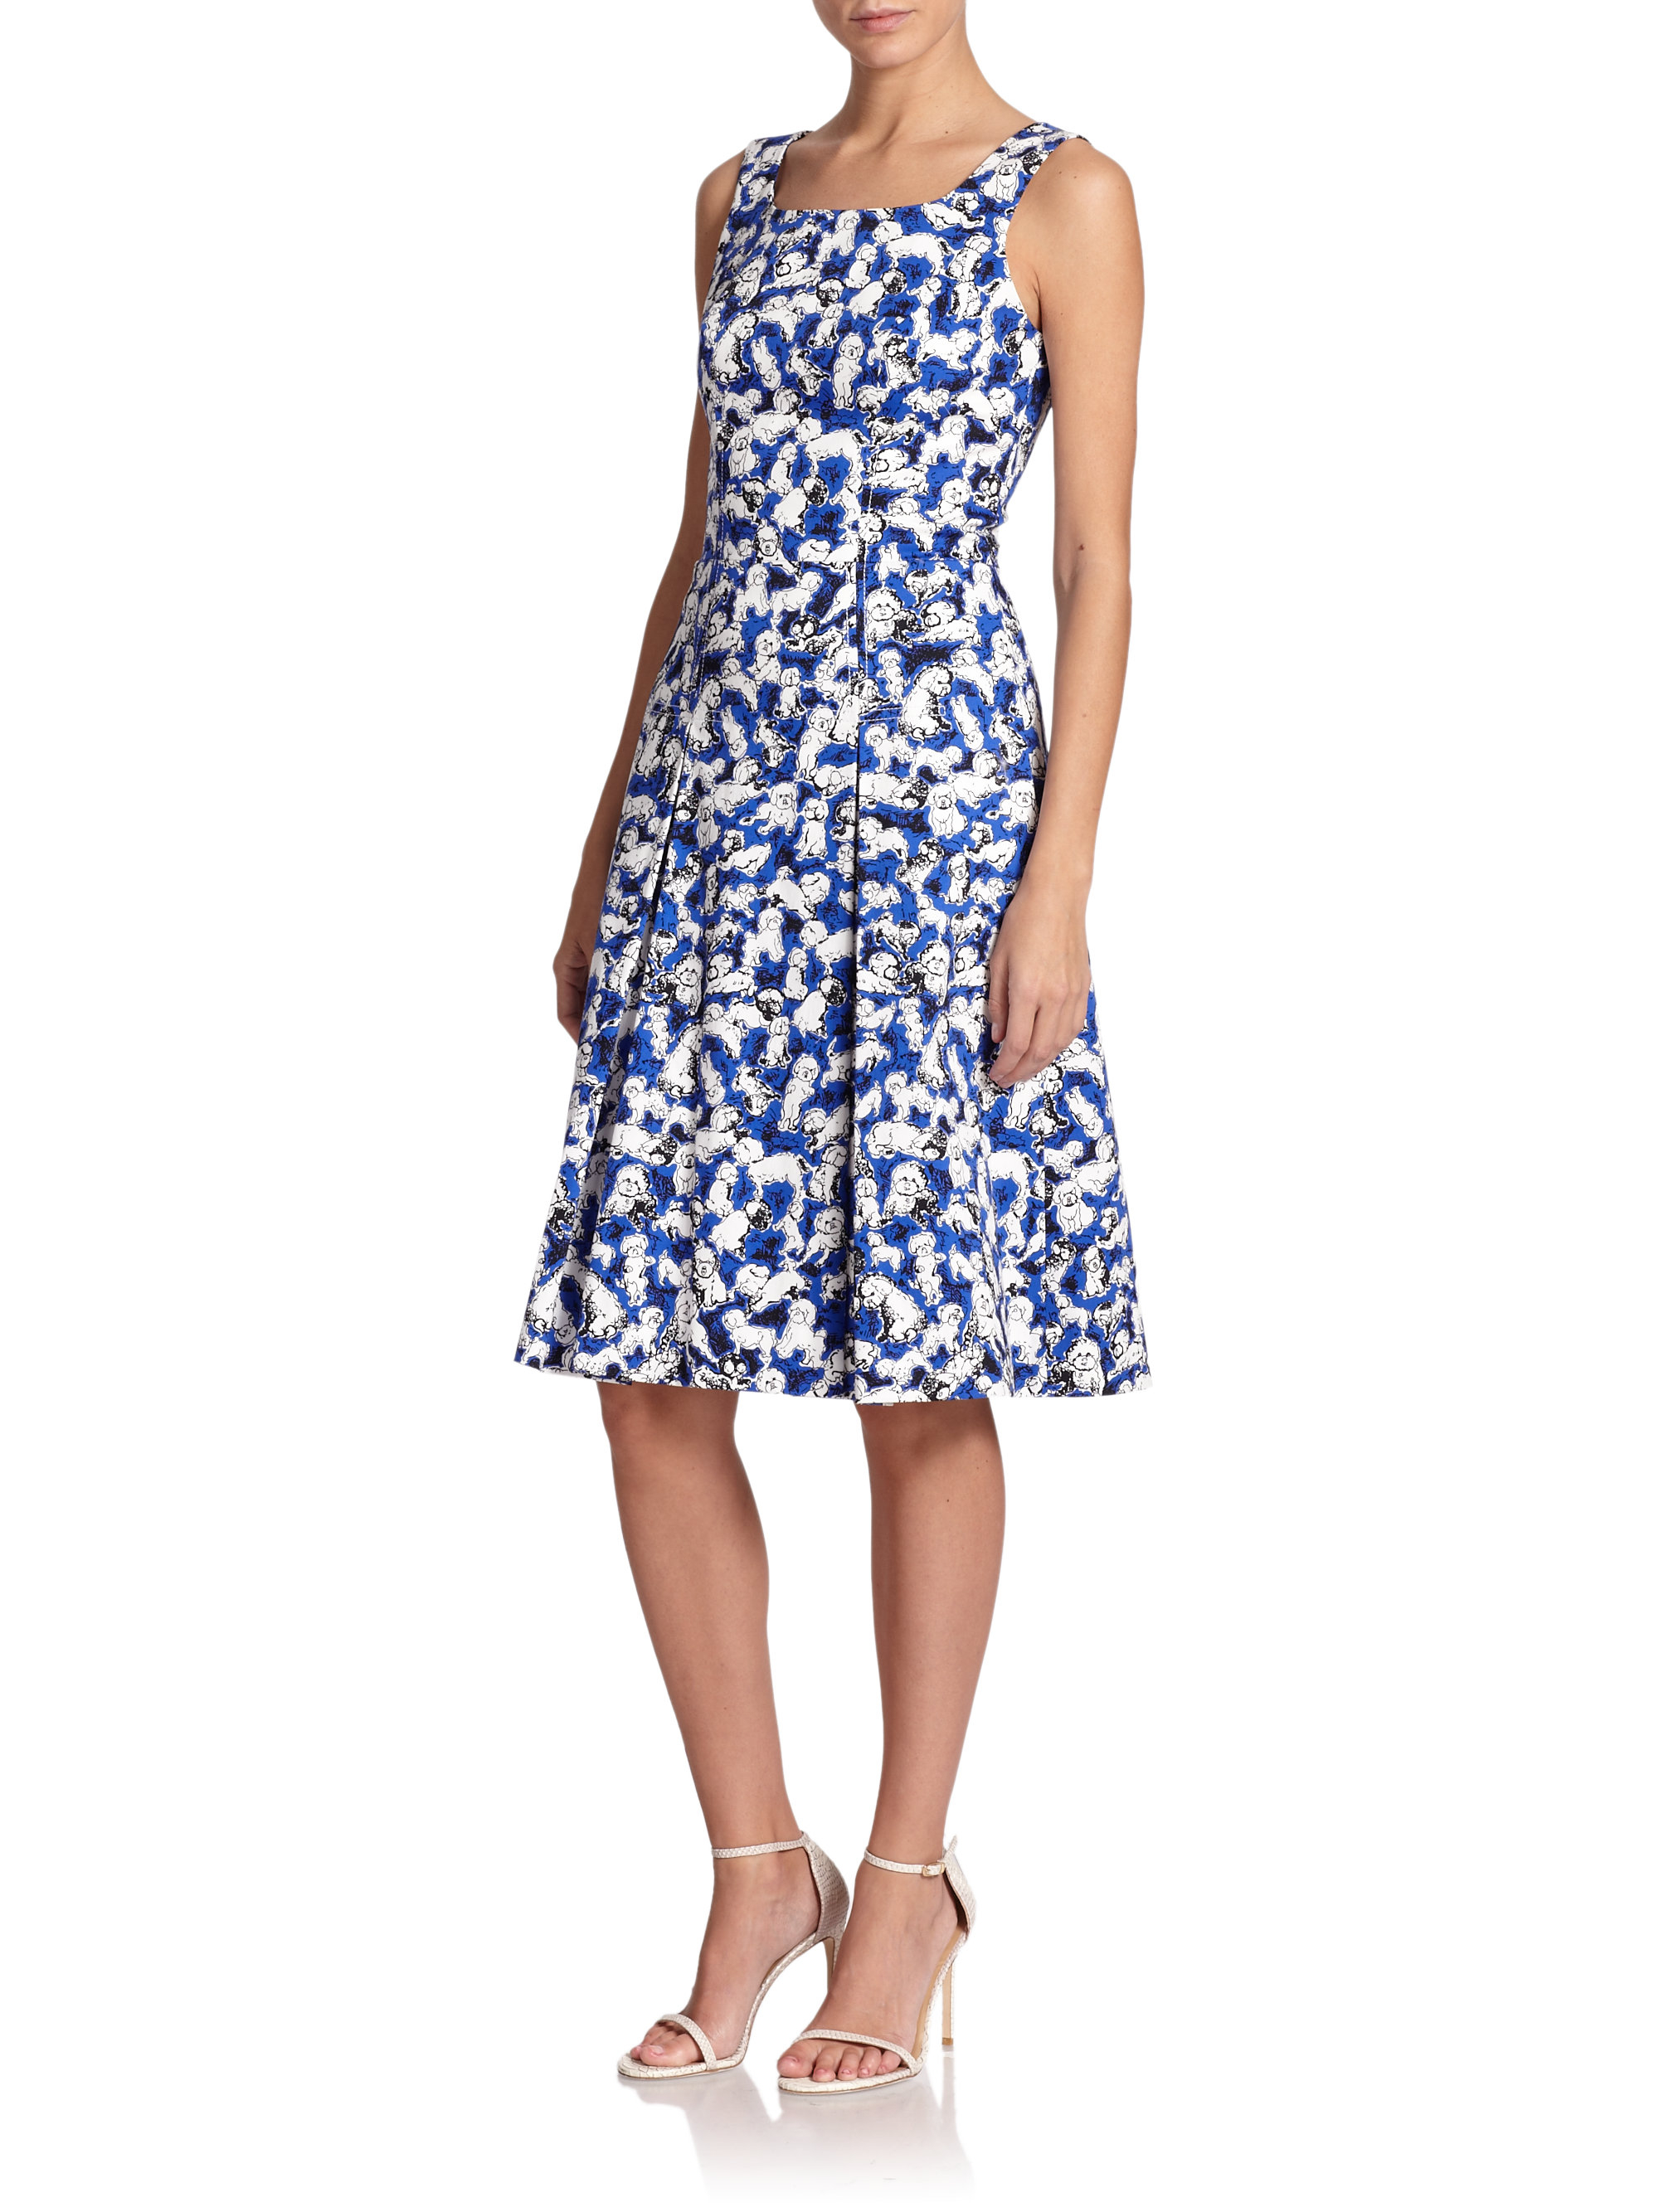 Lyst - Carolina Herrera Gaspar-print A-line Dress in Blue